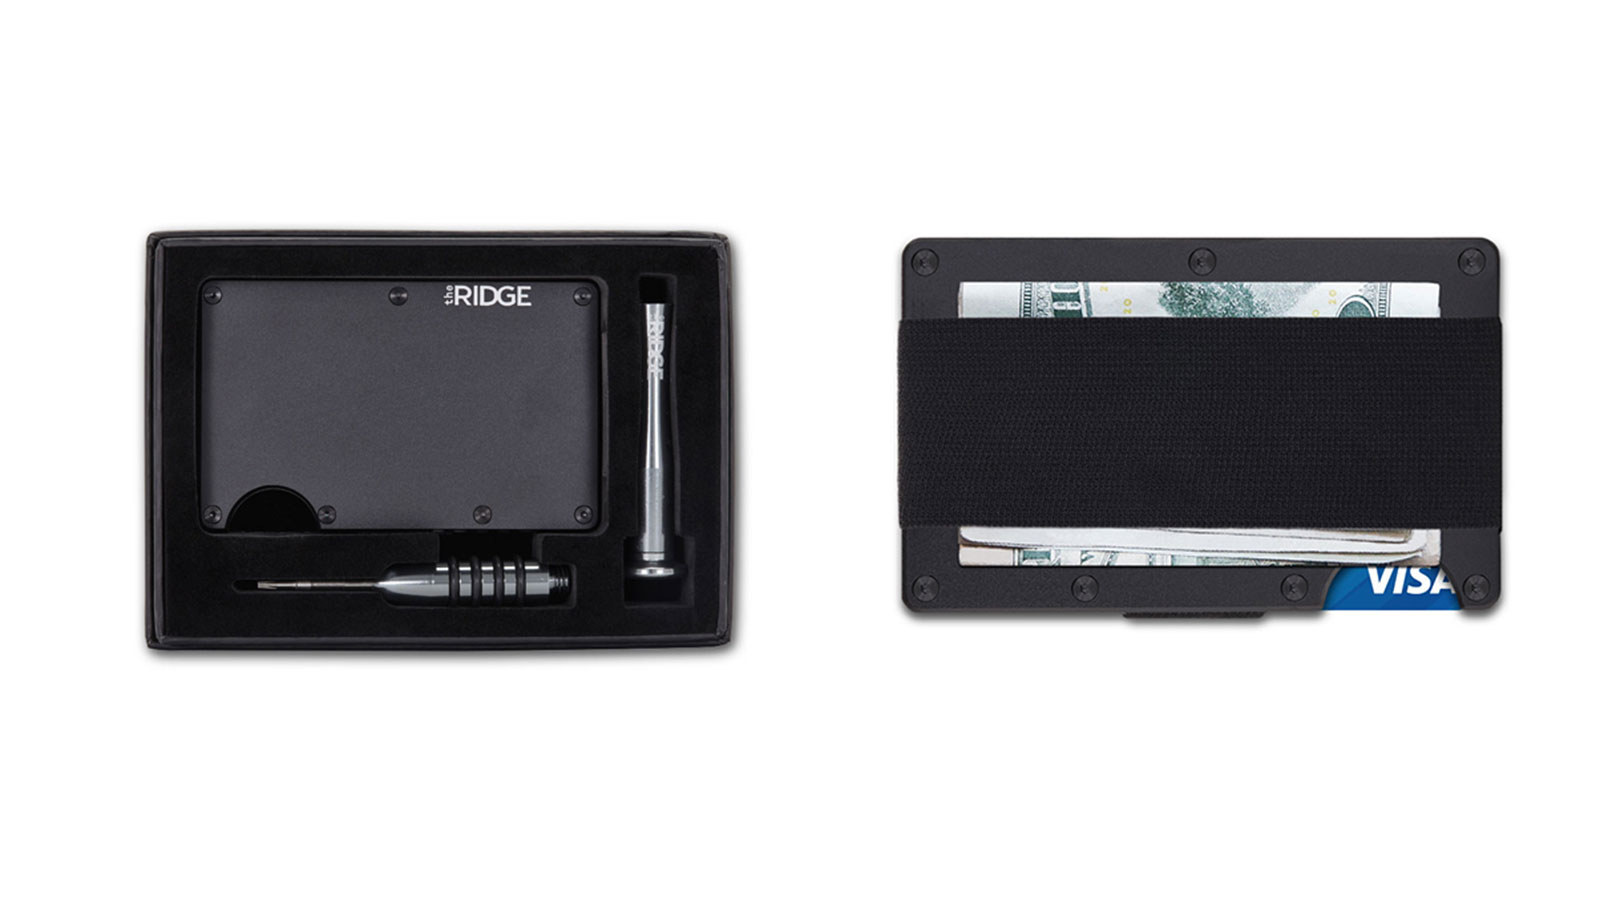 The Ridge Metal Wallet | best metal wallet